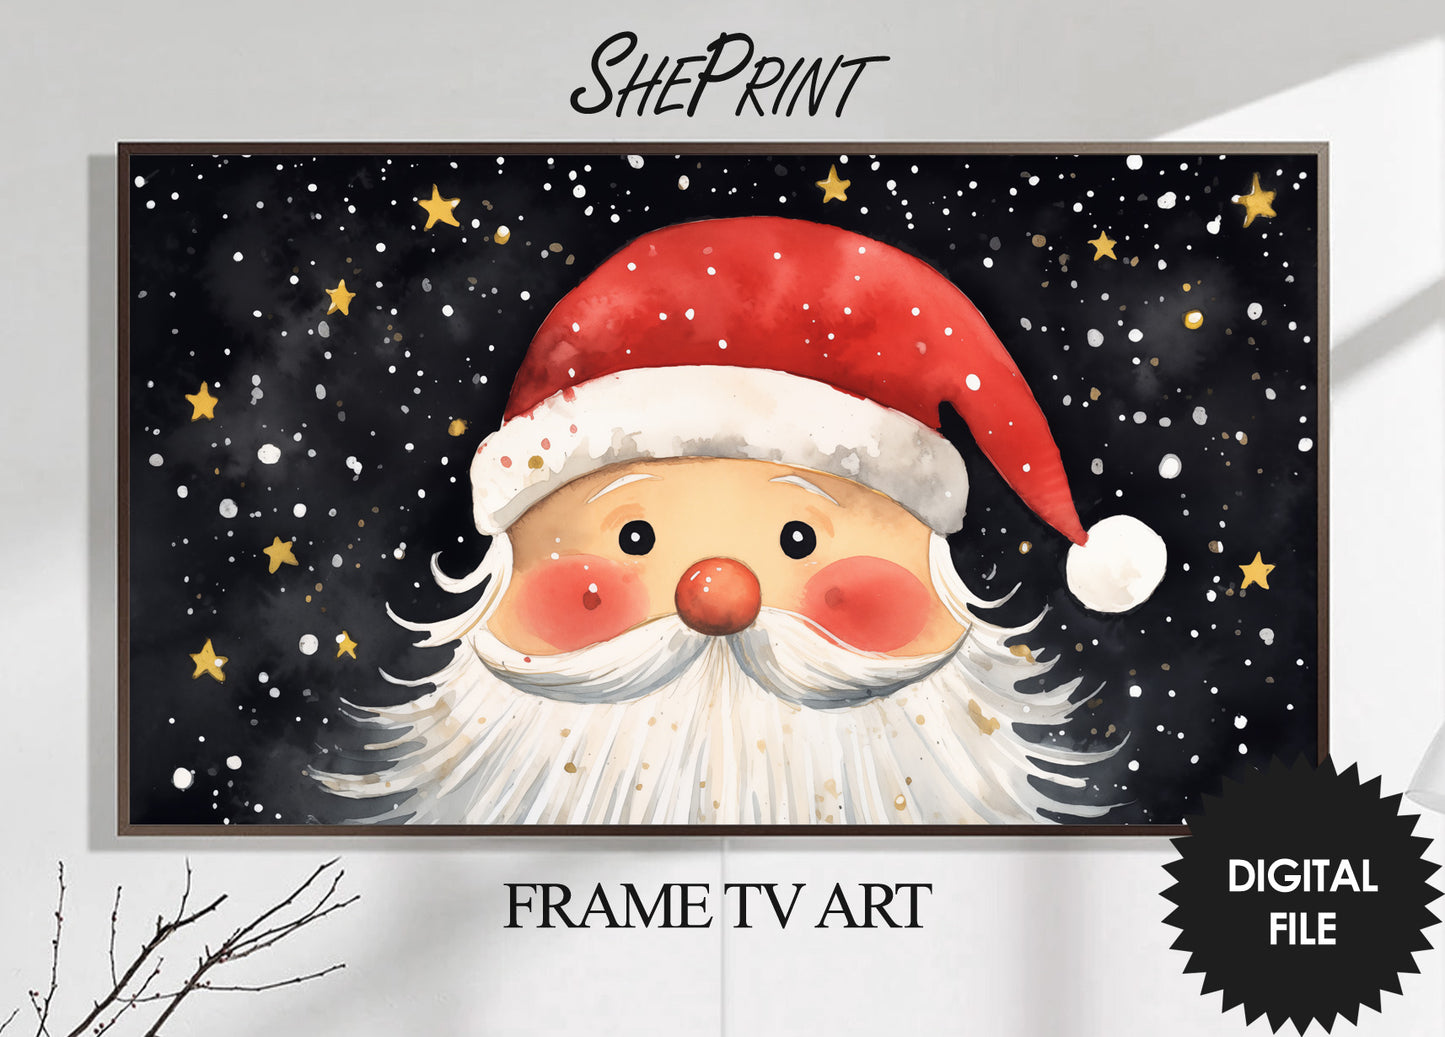 Vertical & Horizontal Frame TV Art For Kids, preview on Samsung Frame TV, Christmas Santa closer view